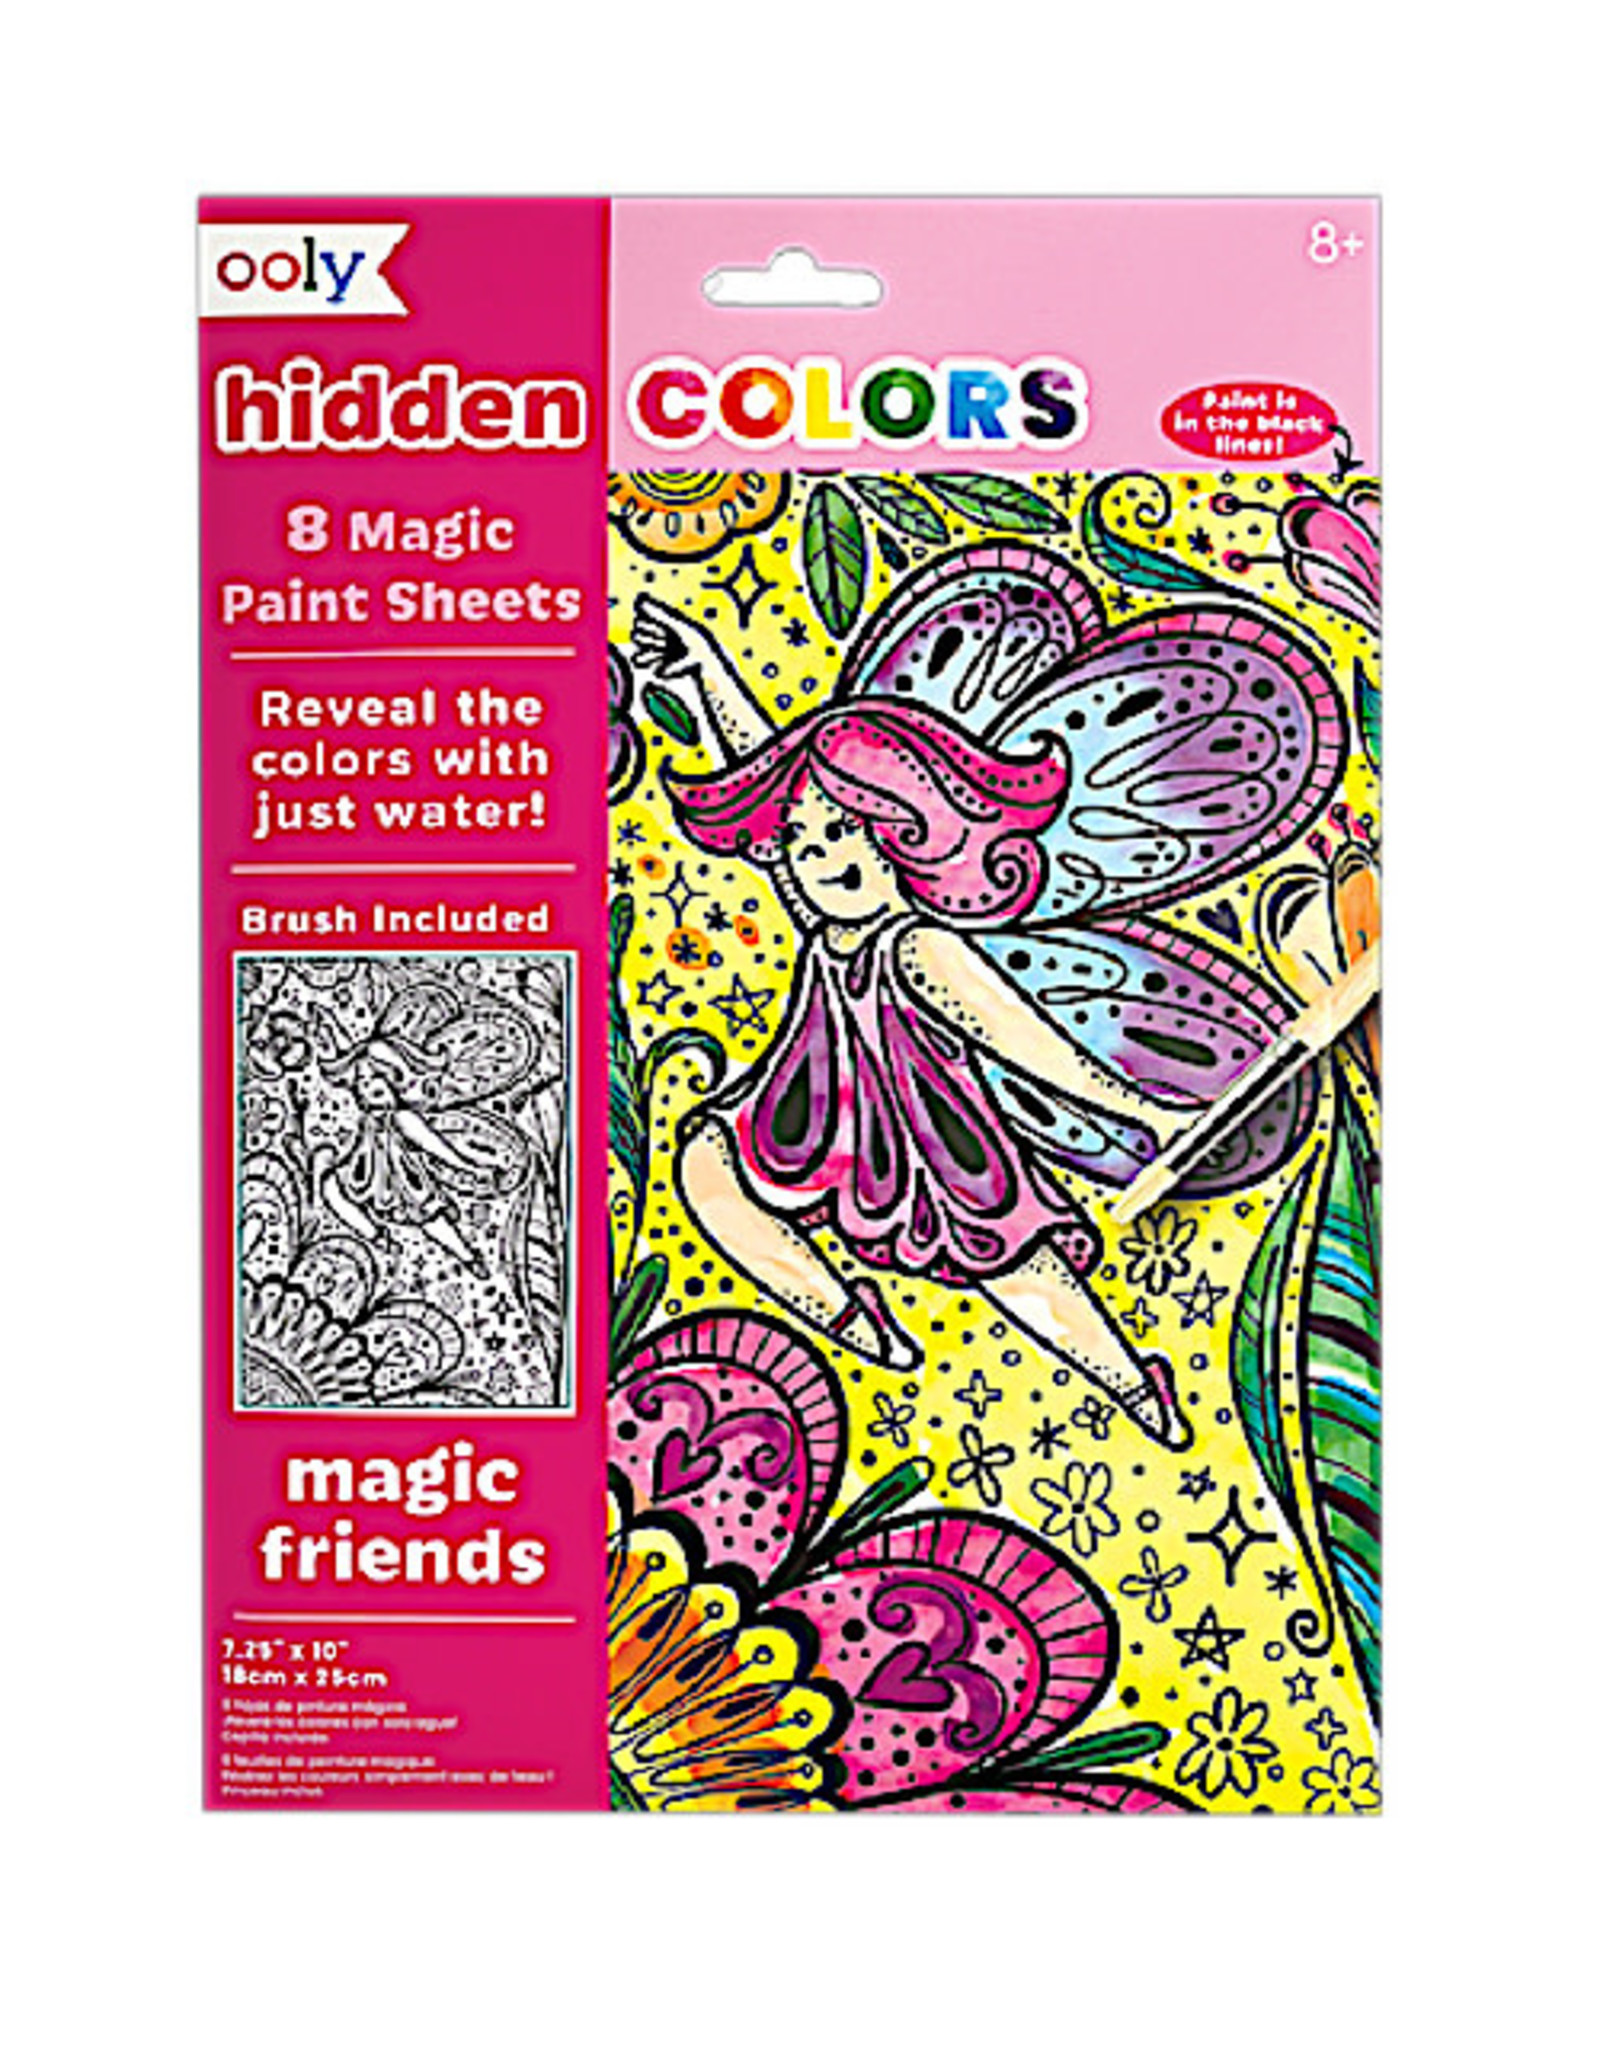 Ooly Hidden Colors Magic Paint Sheets